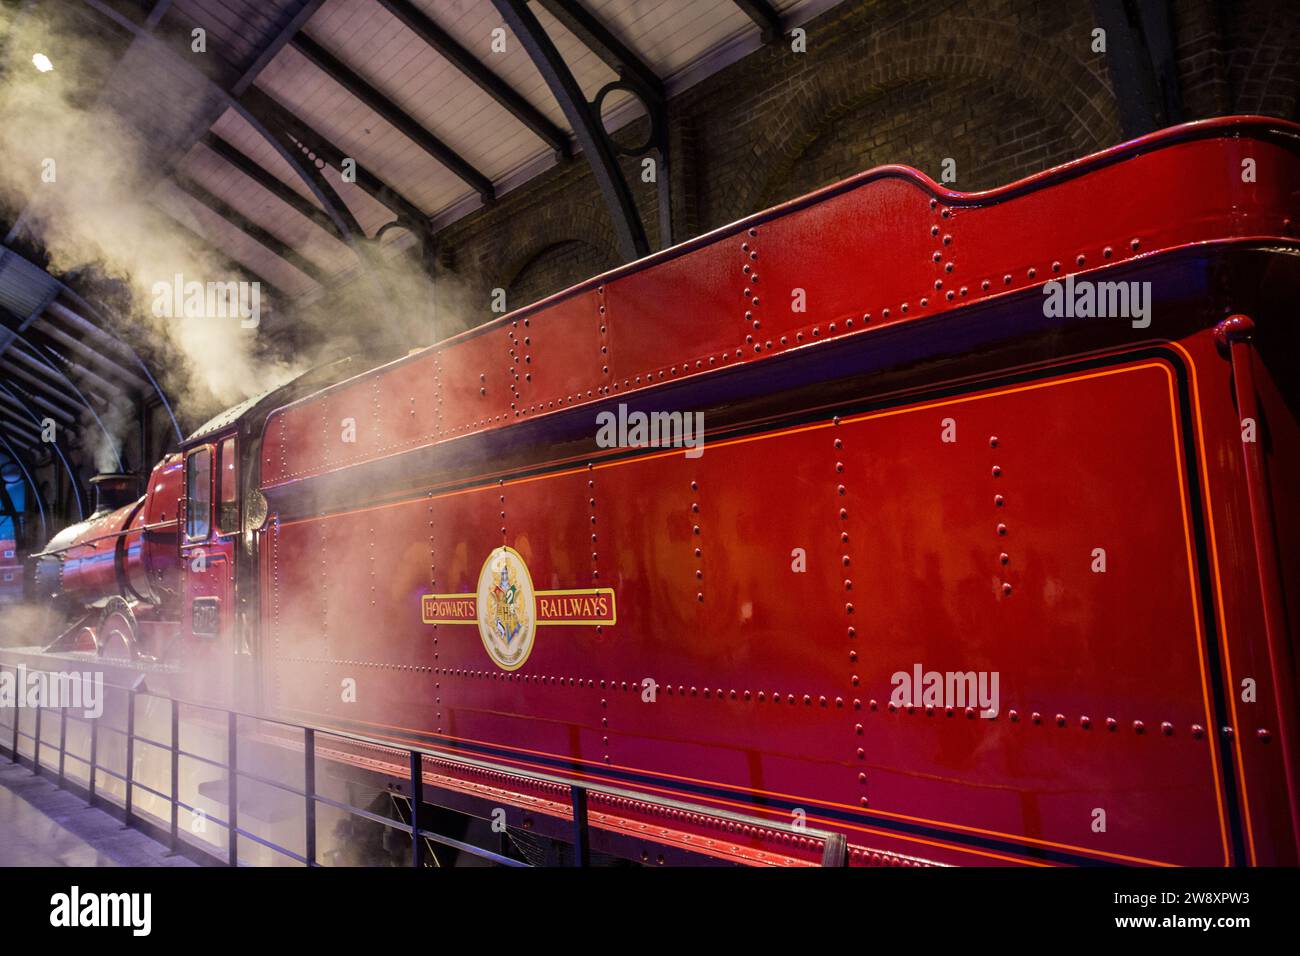 Harry Potter Studio Tour, Warner Bros Studio, London, UK Stock Photo